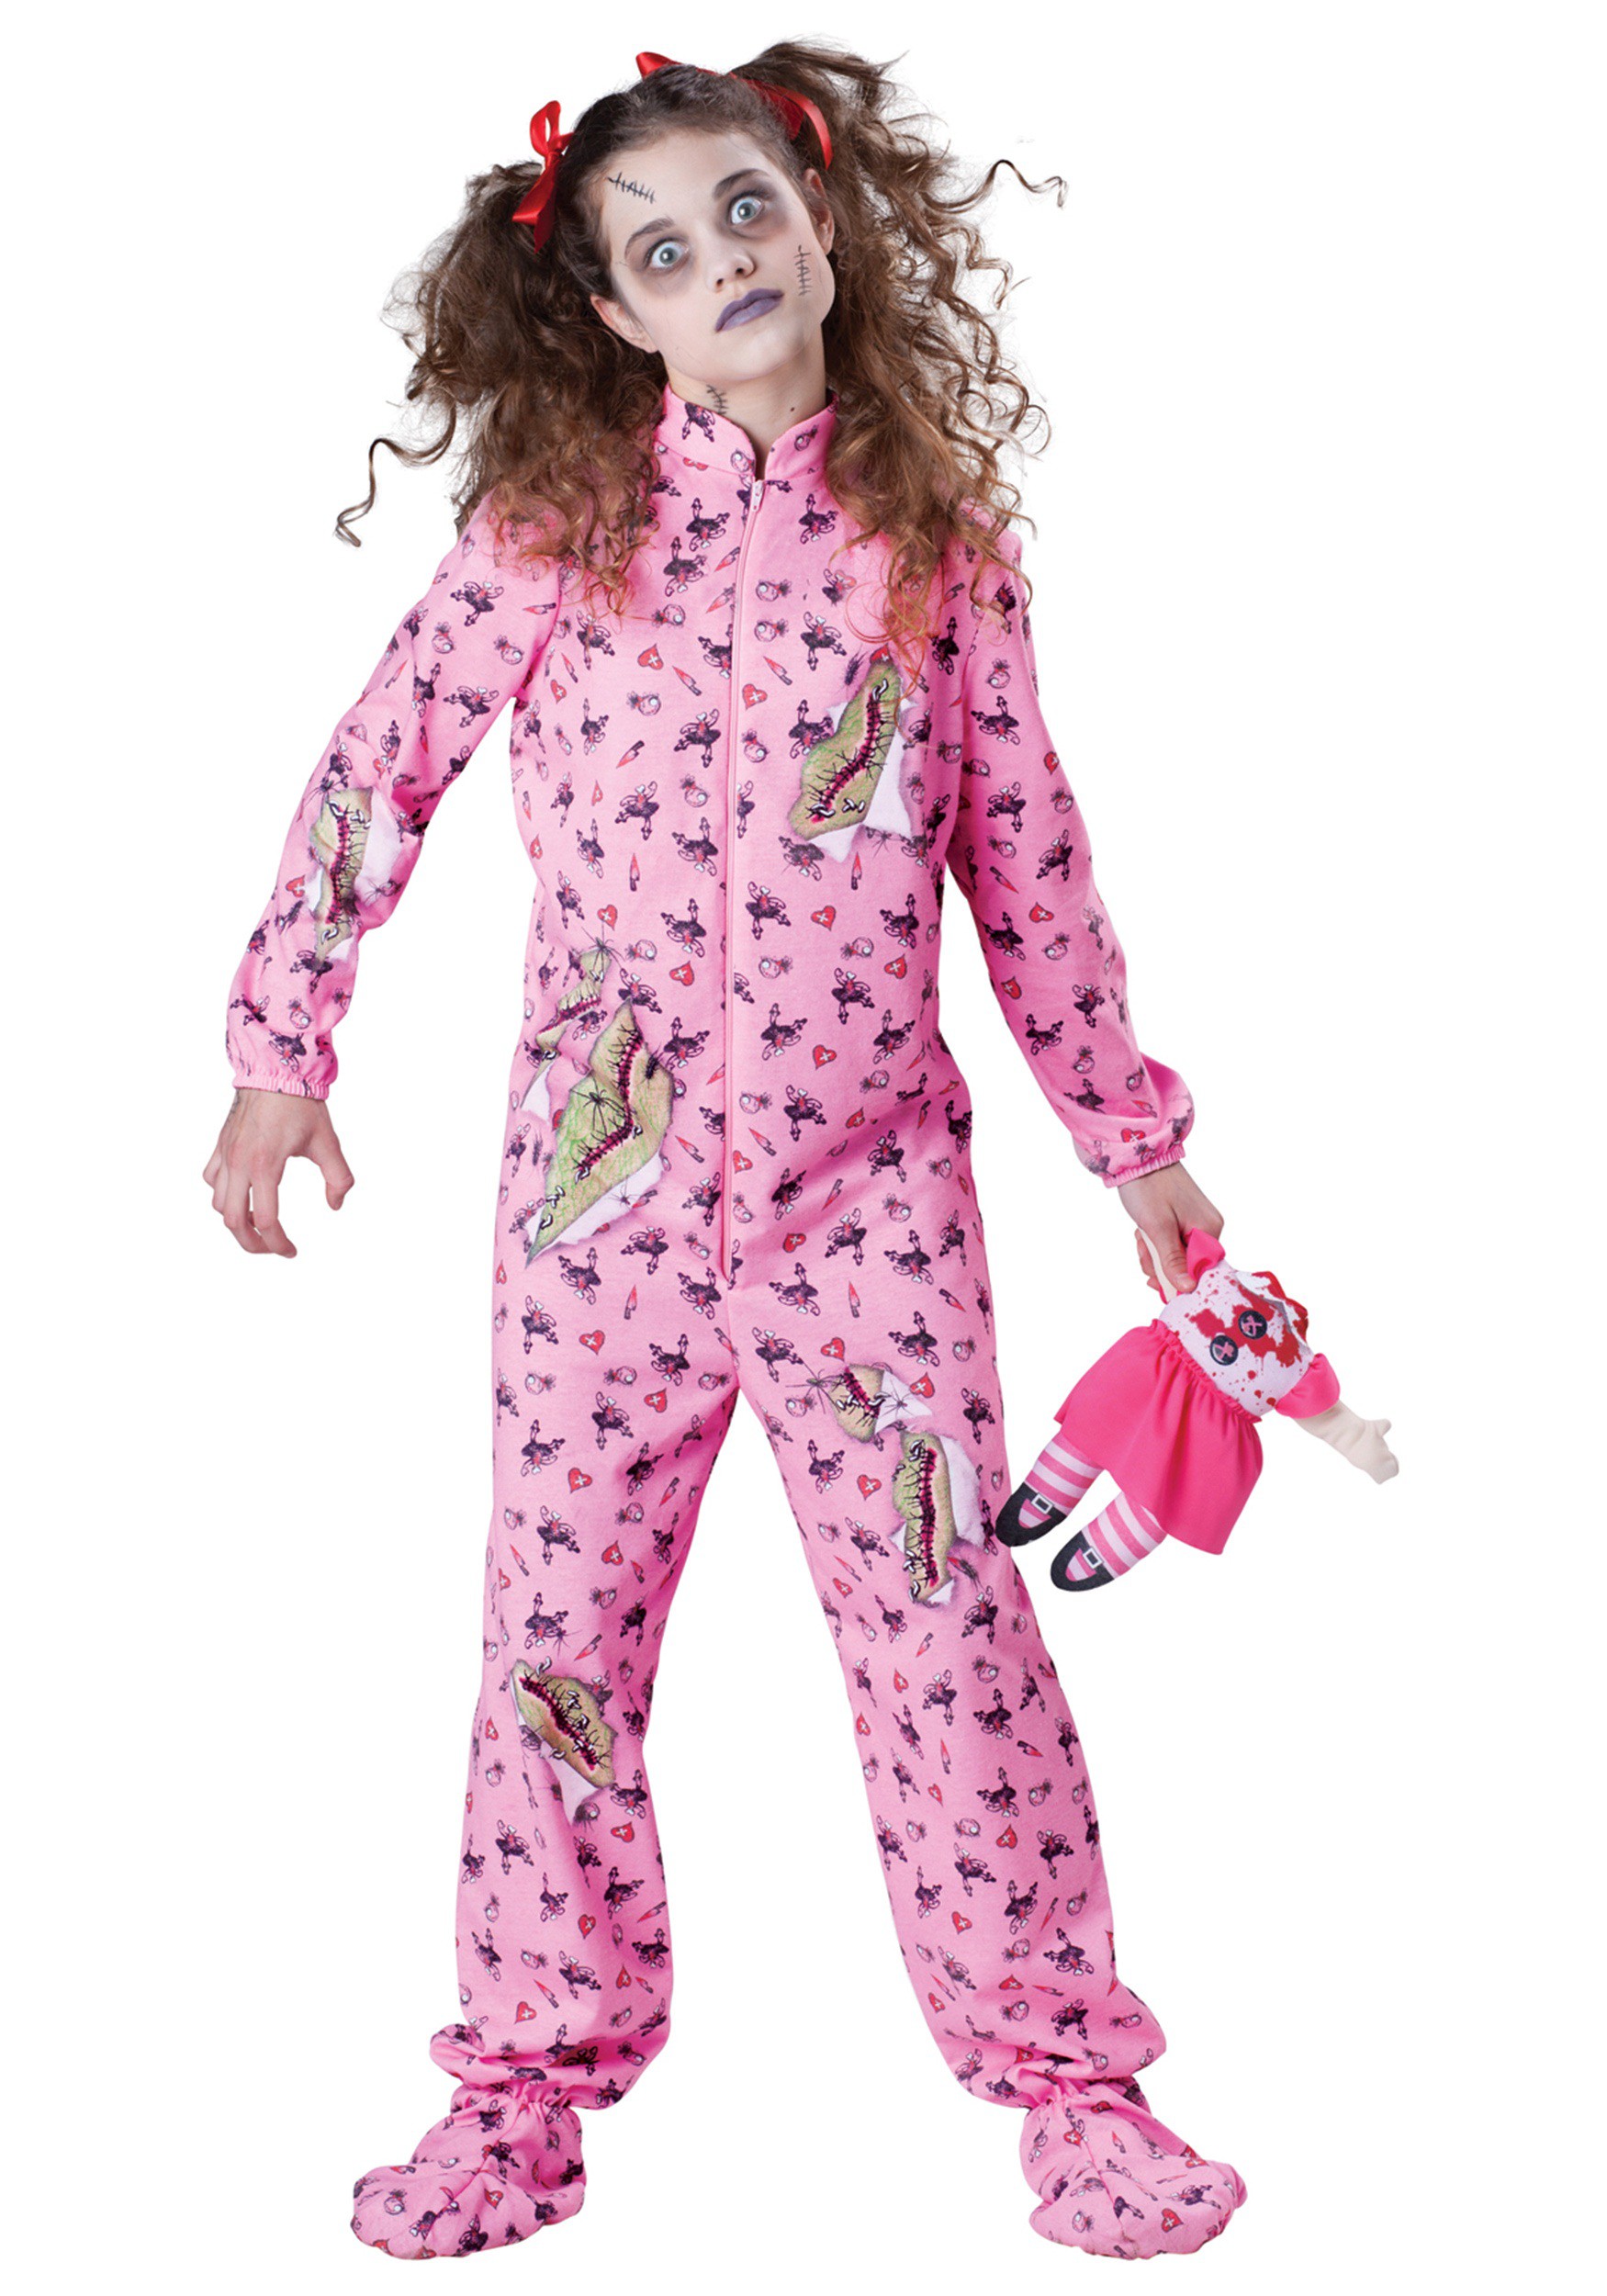 in stand houden barst pomp Fun.com for Girl's Zombie Kids Costume | Fandom Shop